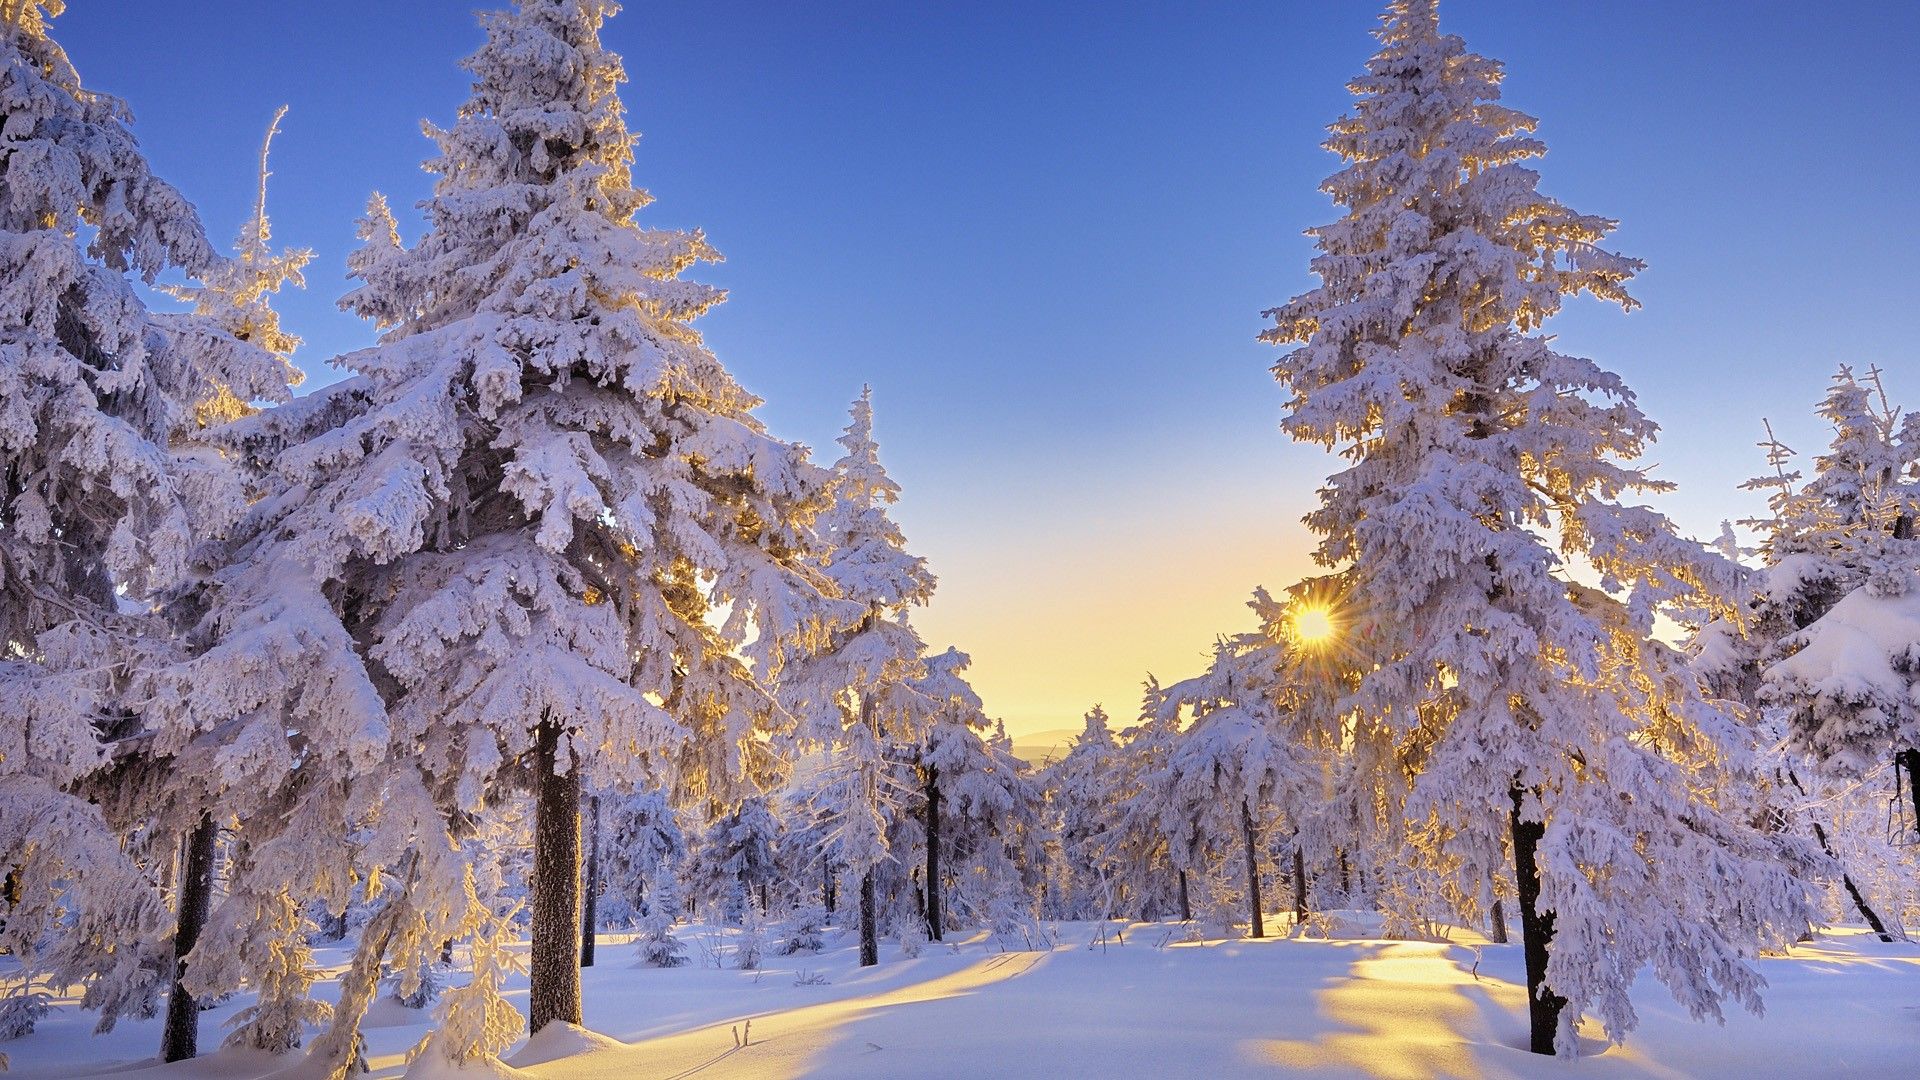 Download Gorgeous Winter Snow Wallpaper 44338 1920x1080 px High Definition Wallpaper